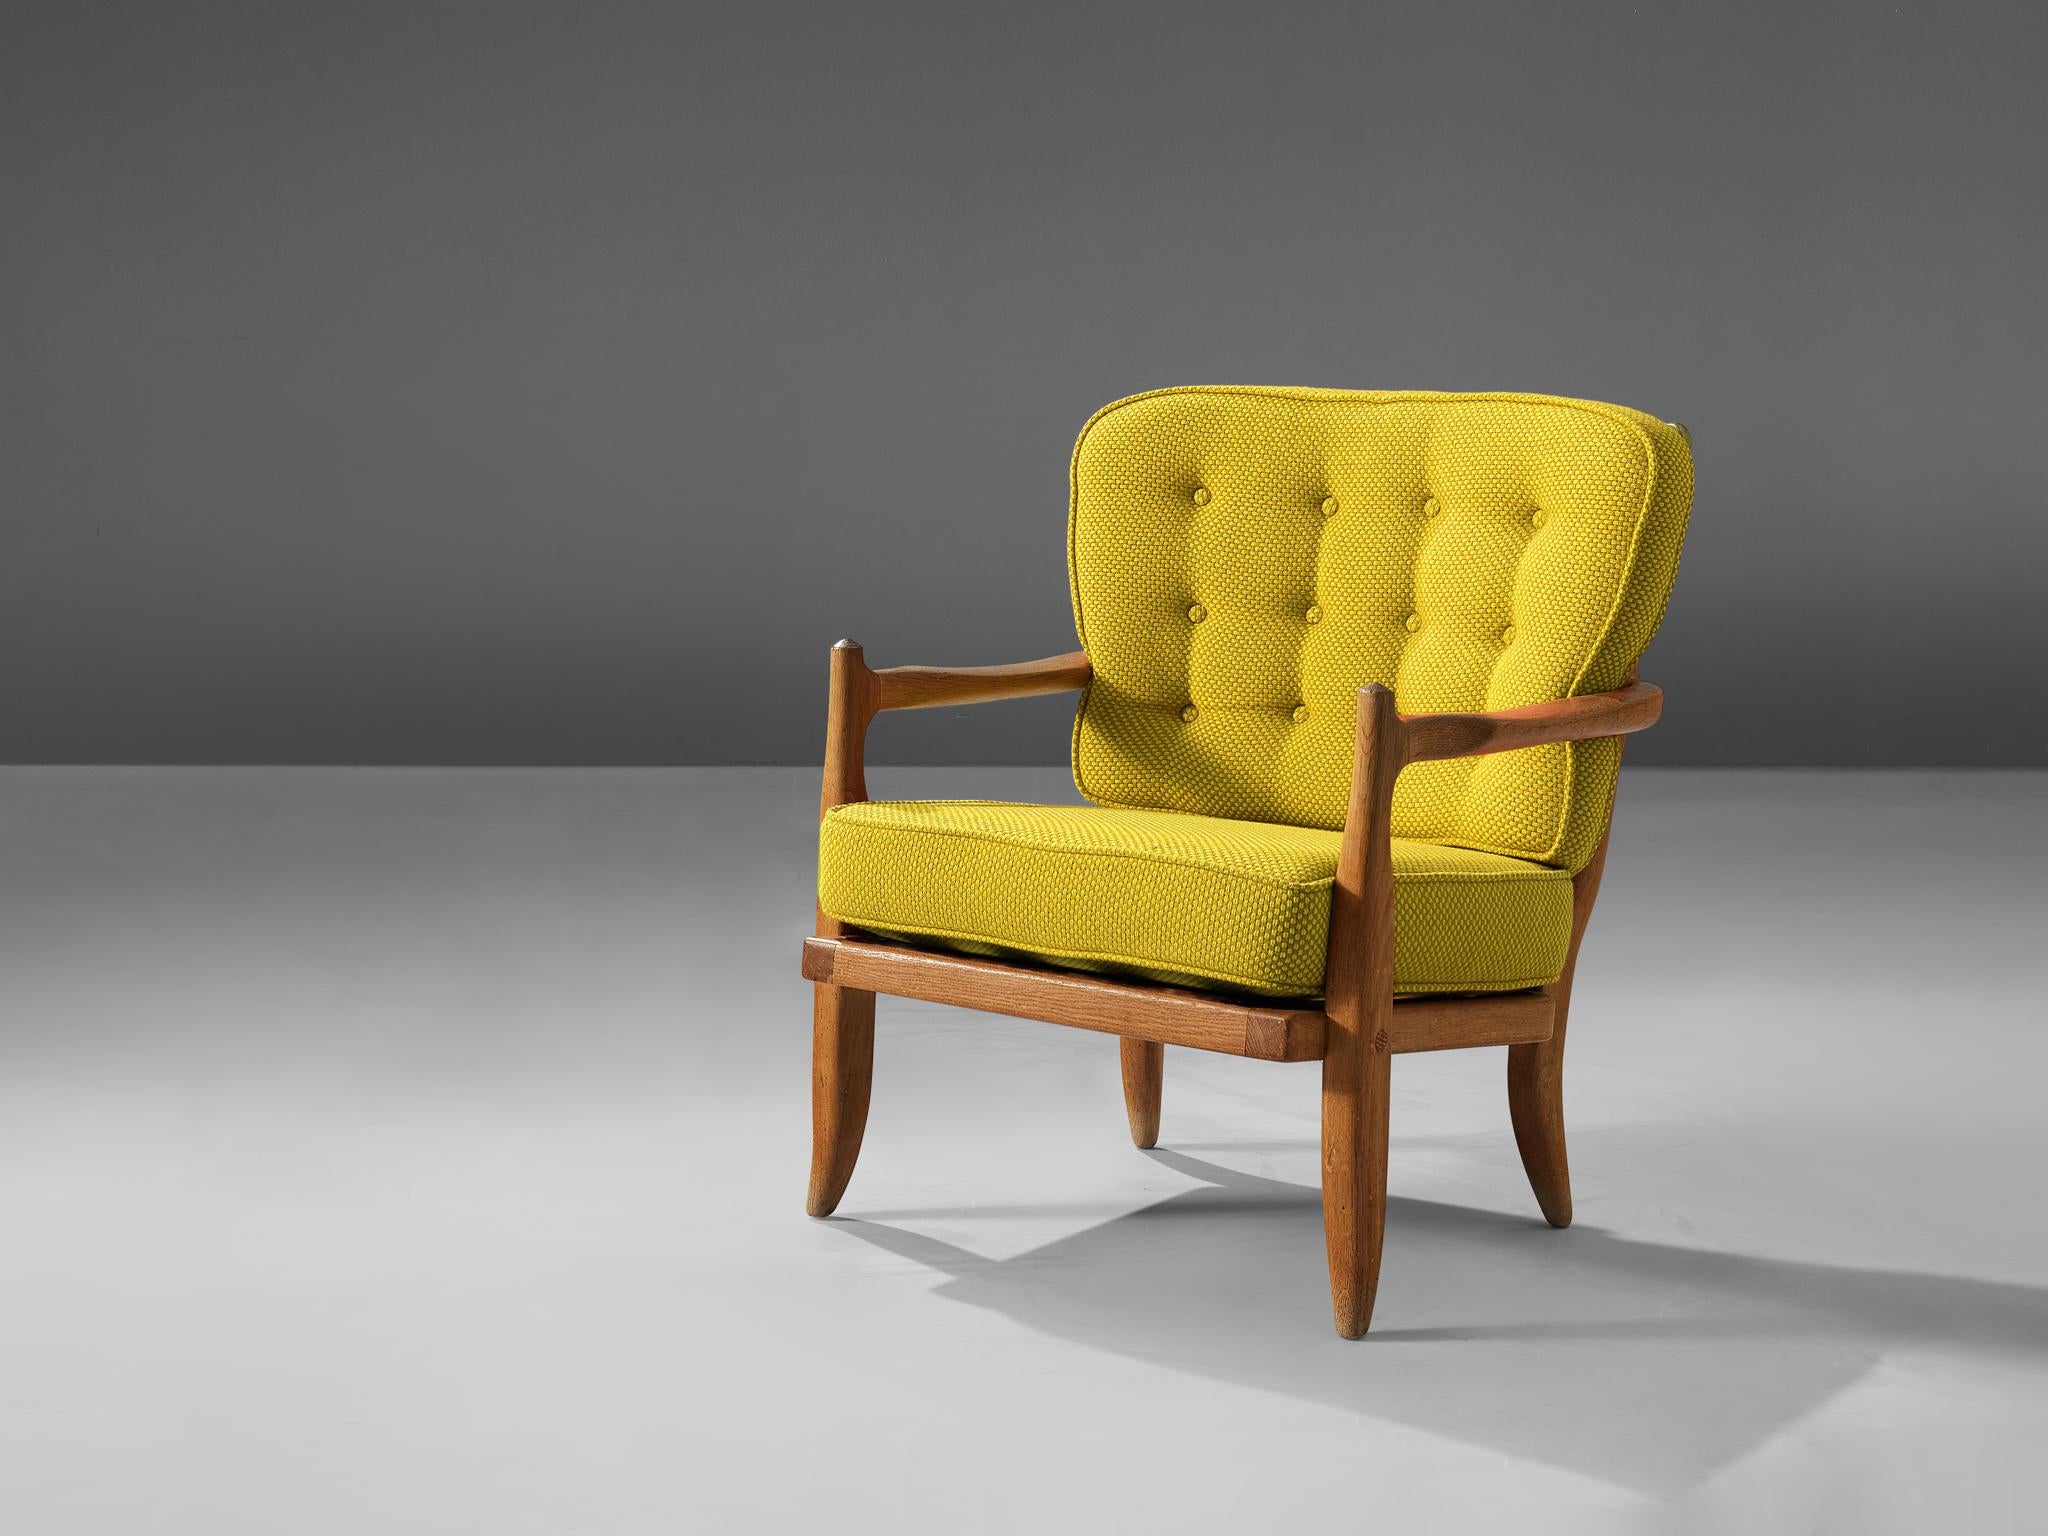 Guillerme & Chambron 'Jose' Lounge Chair in Oak